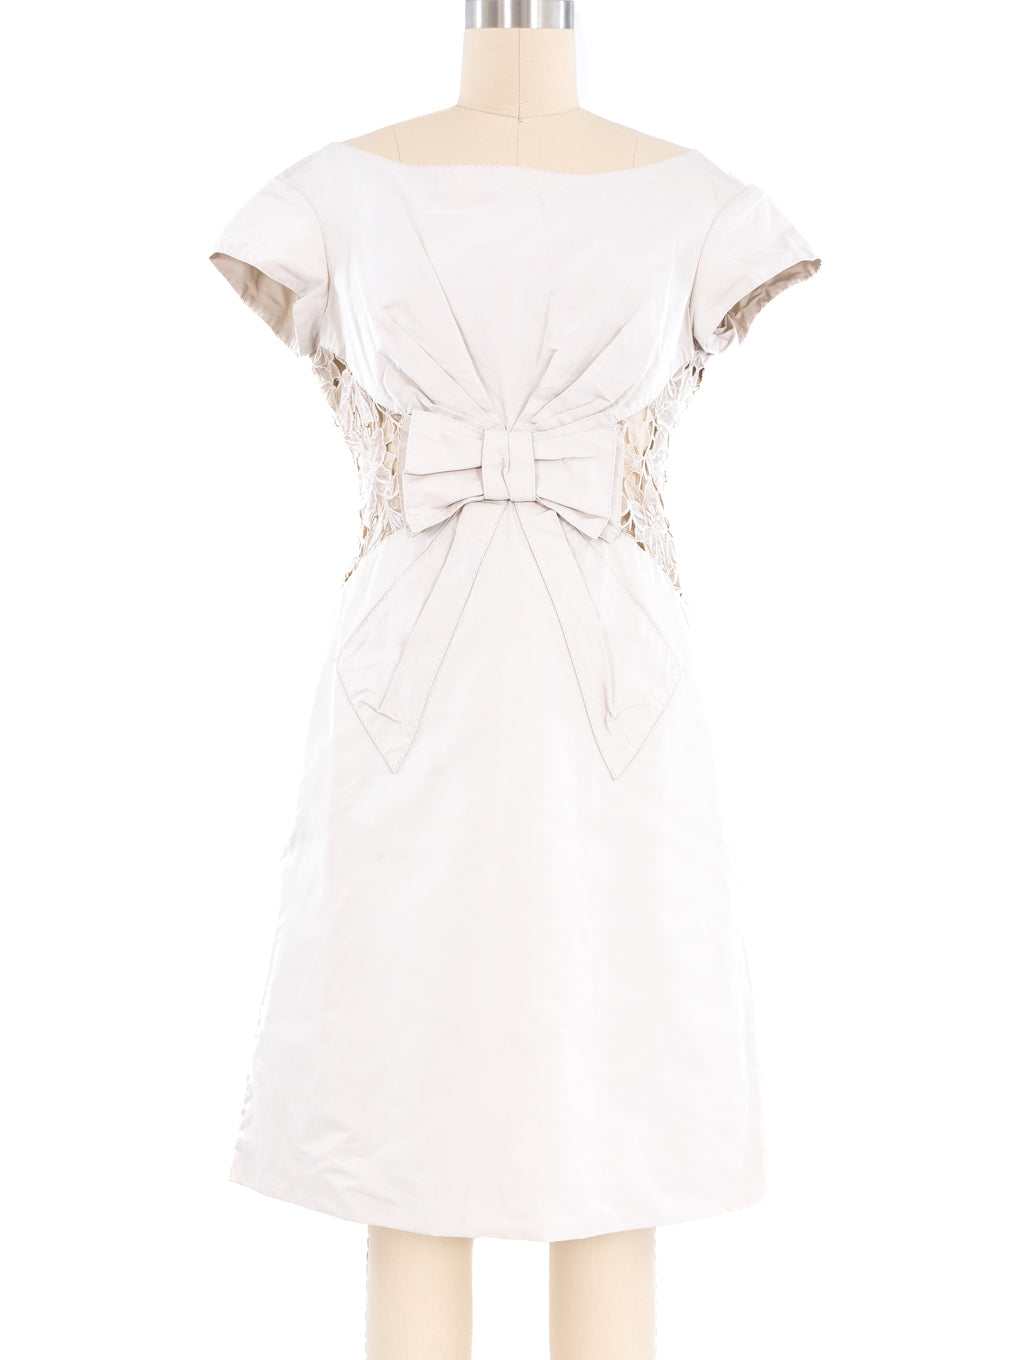 louis vuitton white dress